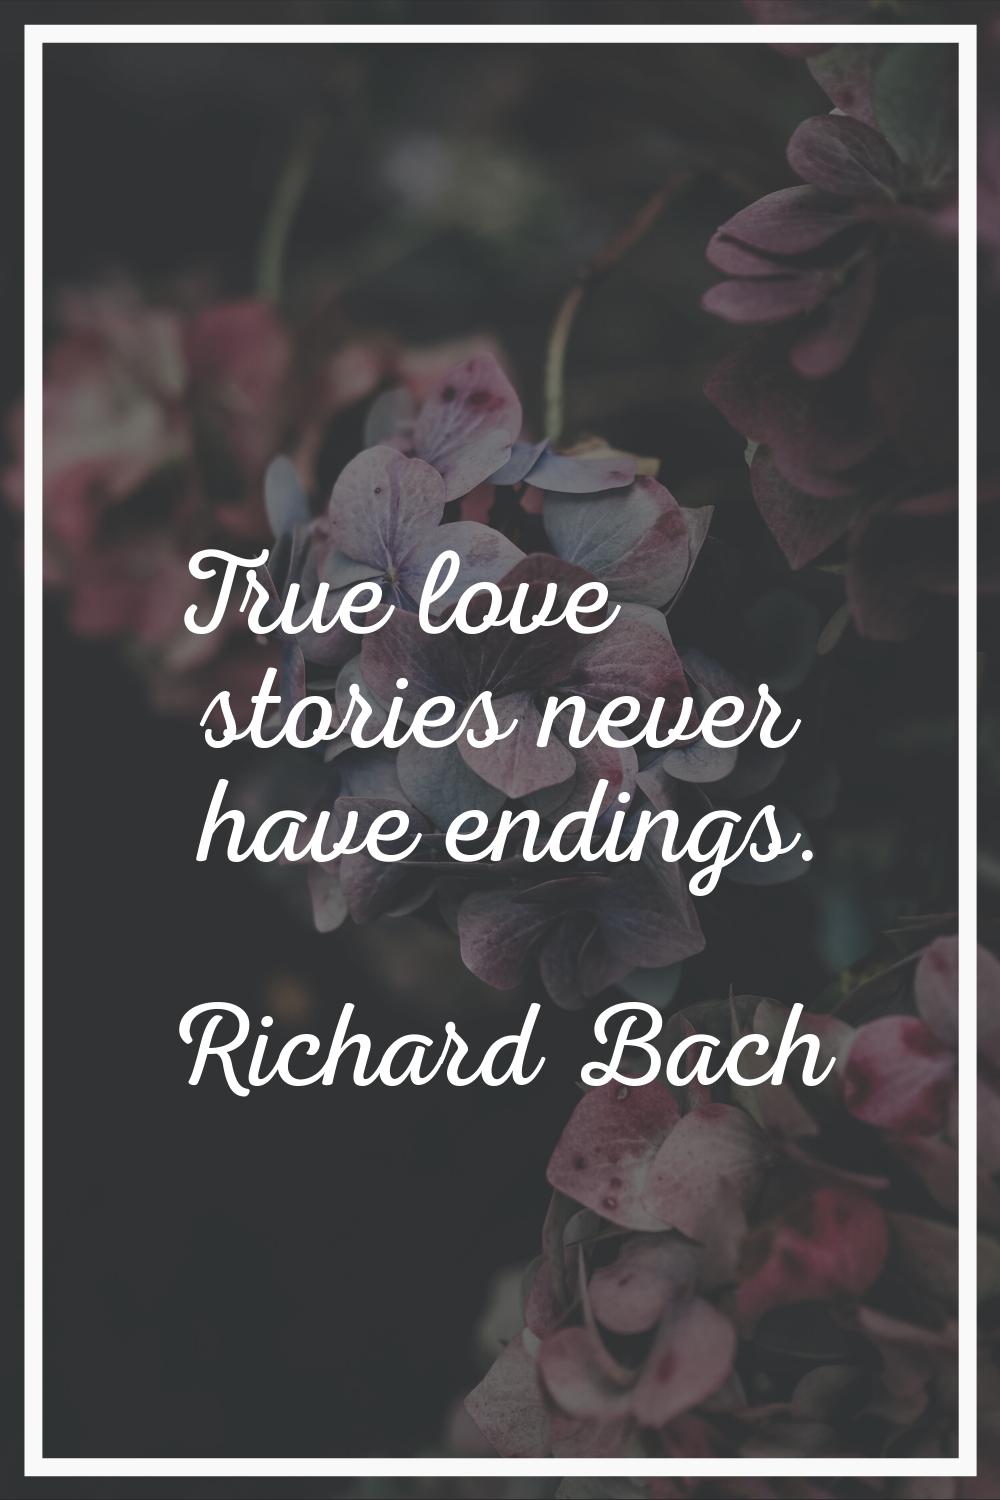 True love stories never have endings.